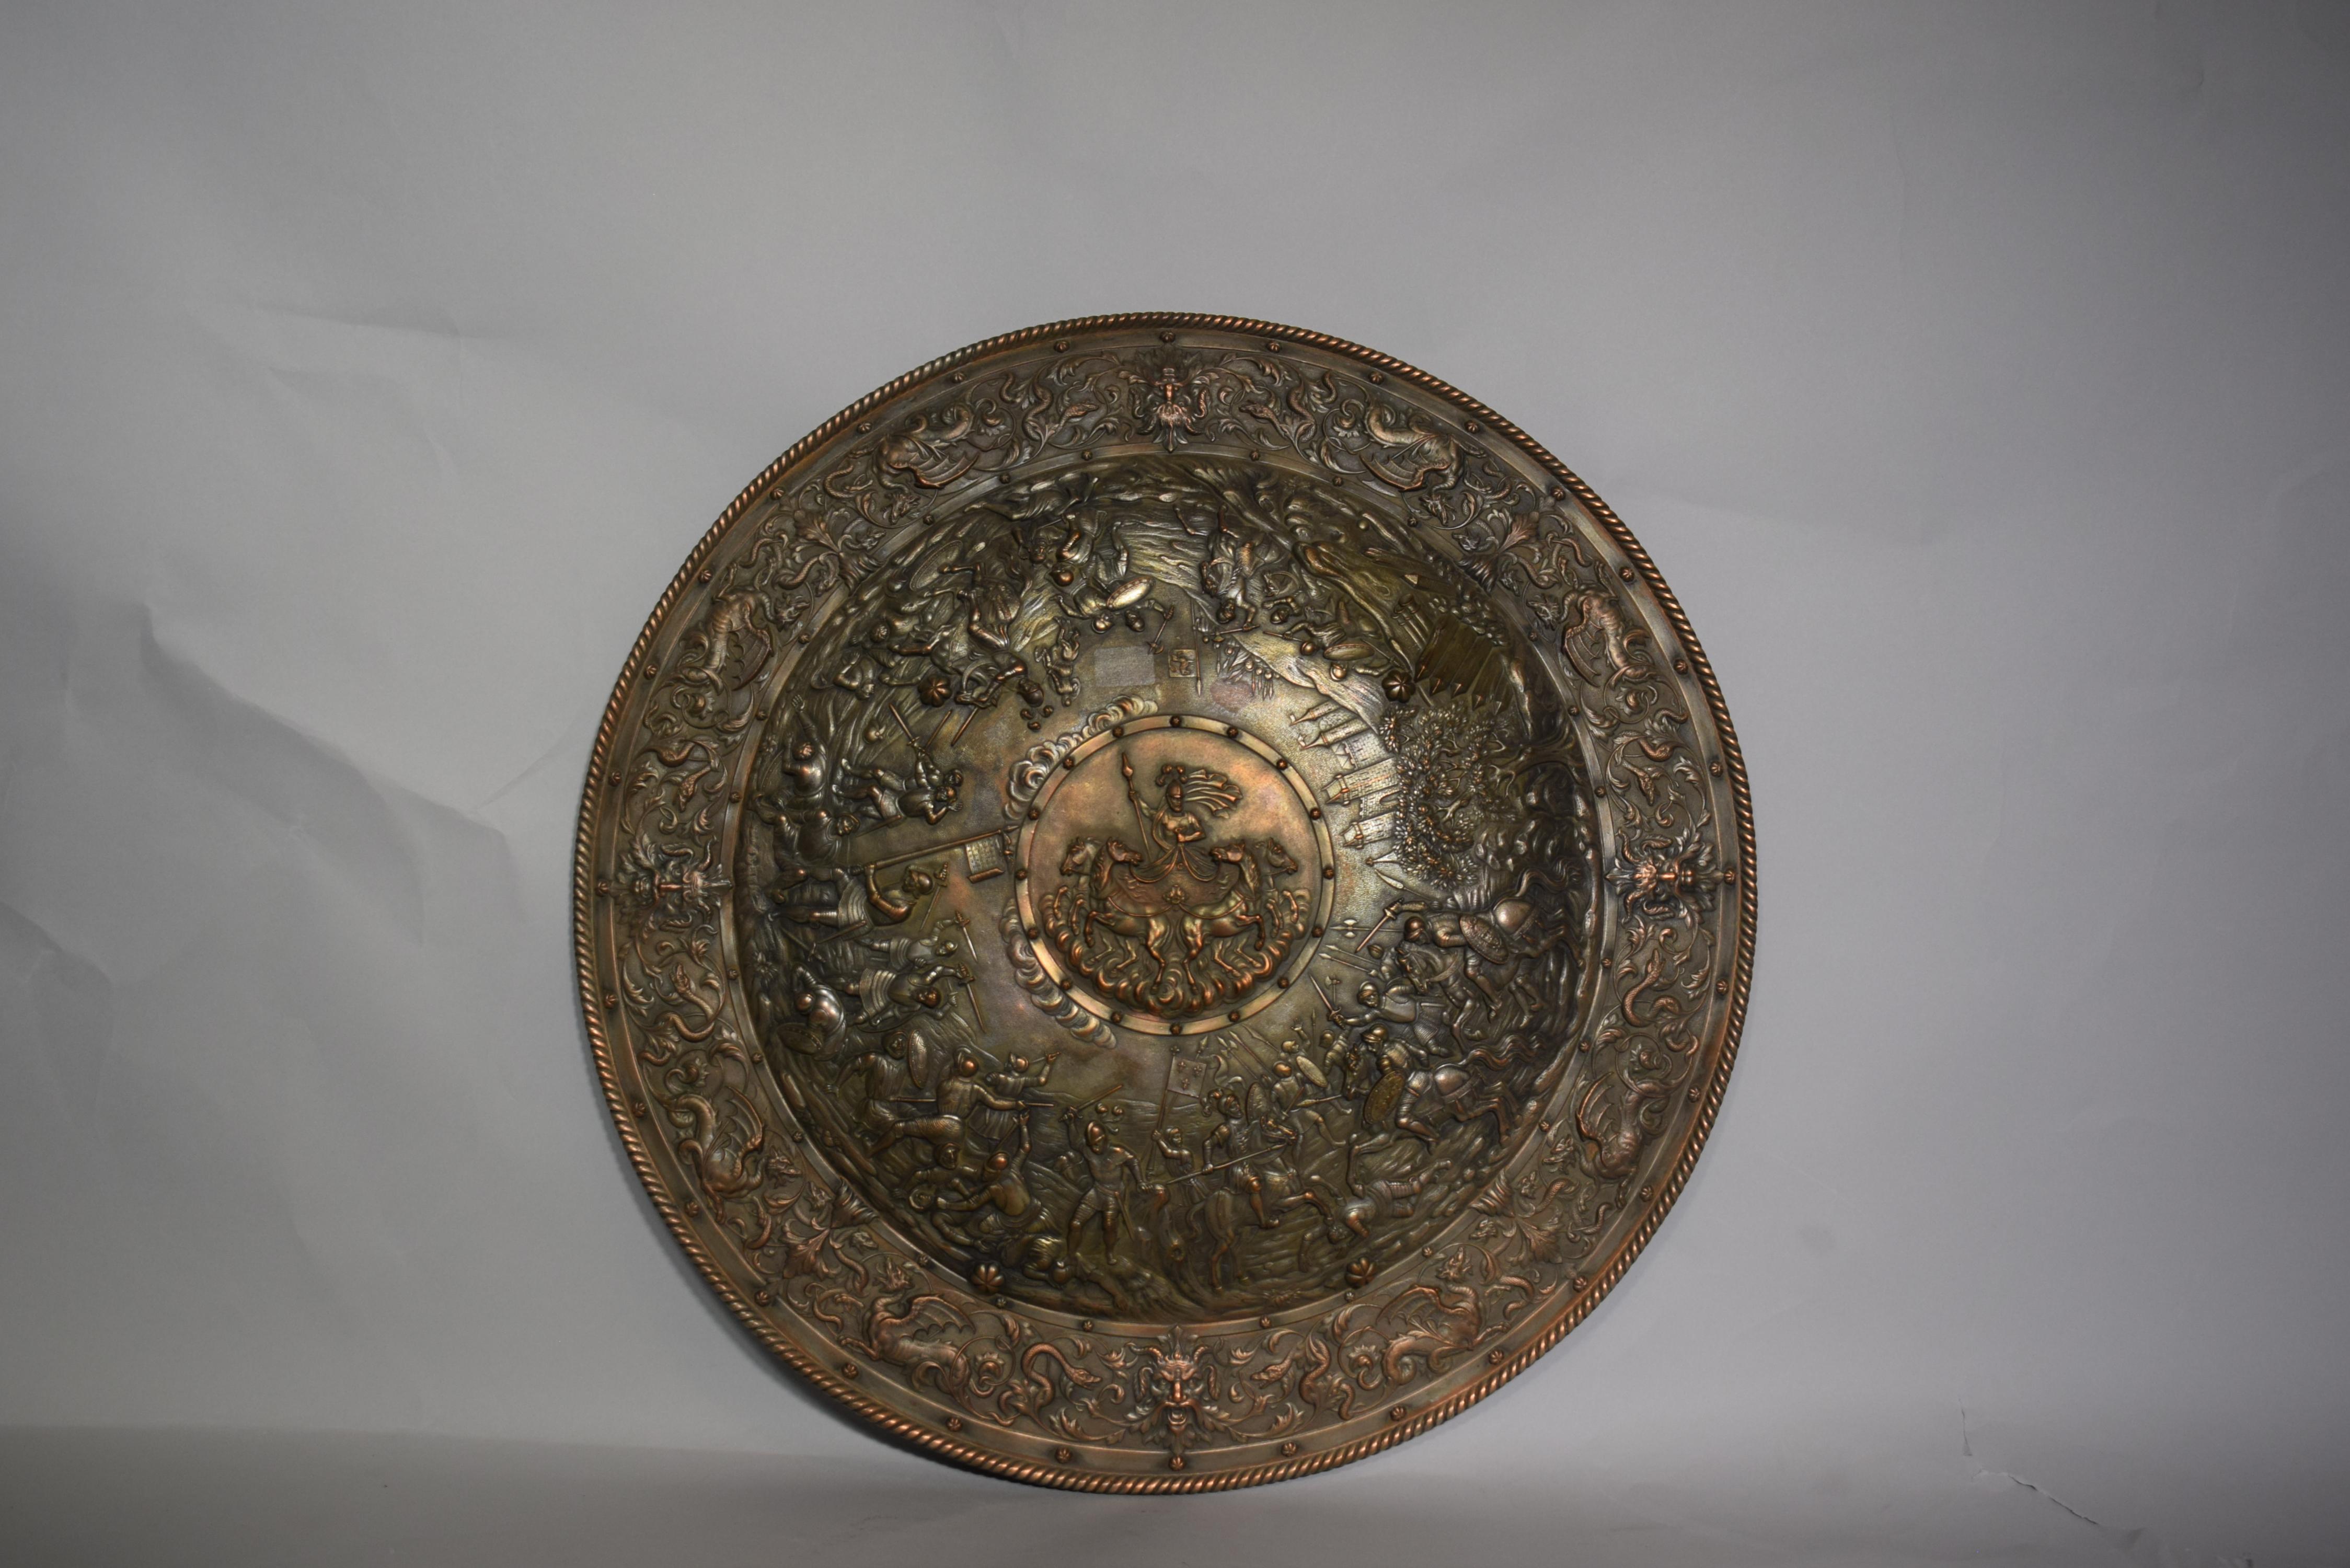 English Superb Silverplated Circular Shield Depicting Battle Scene